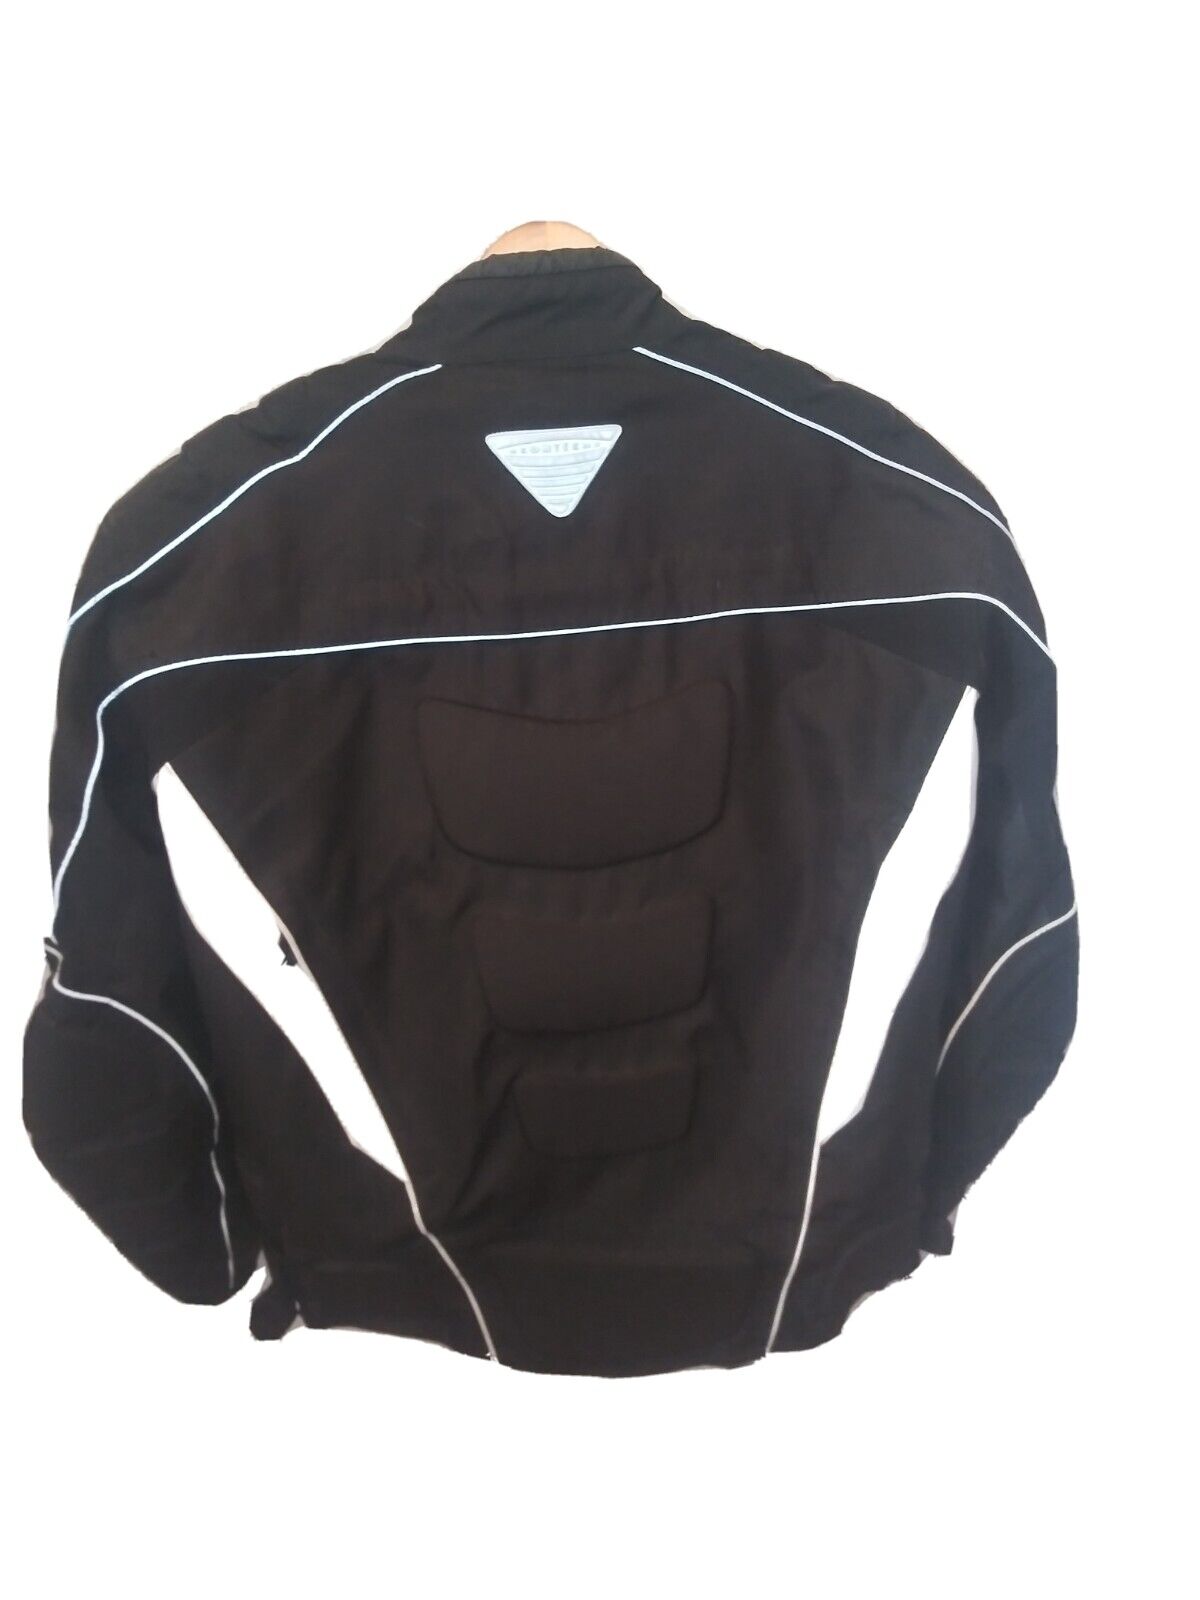 Coat Jacket Motorcycle Cortech FSX Men's LG Large L 44 Black Some Flaws@